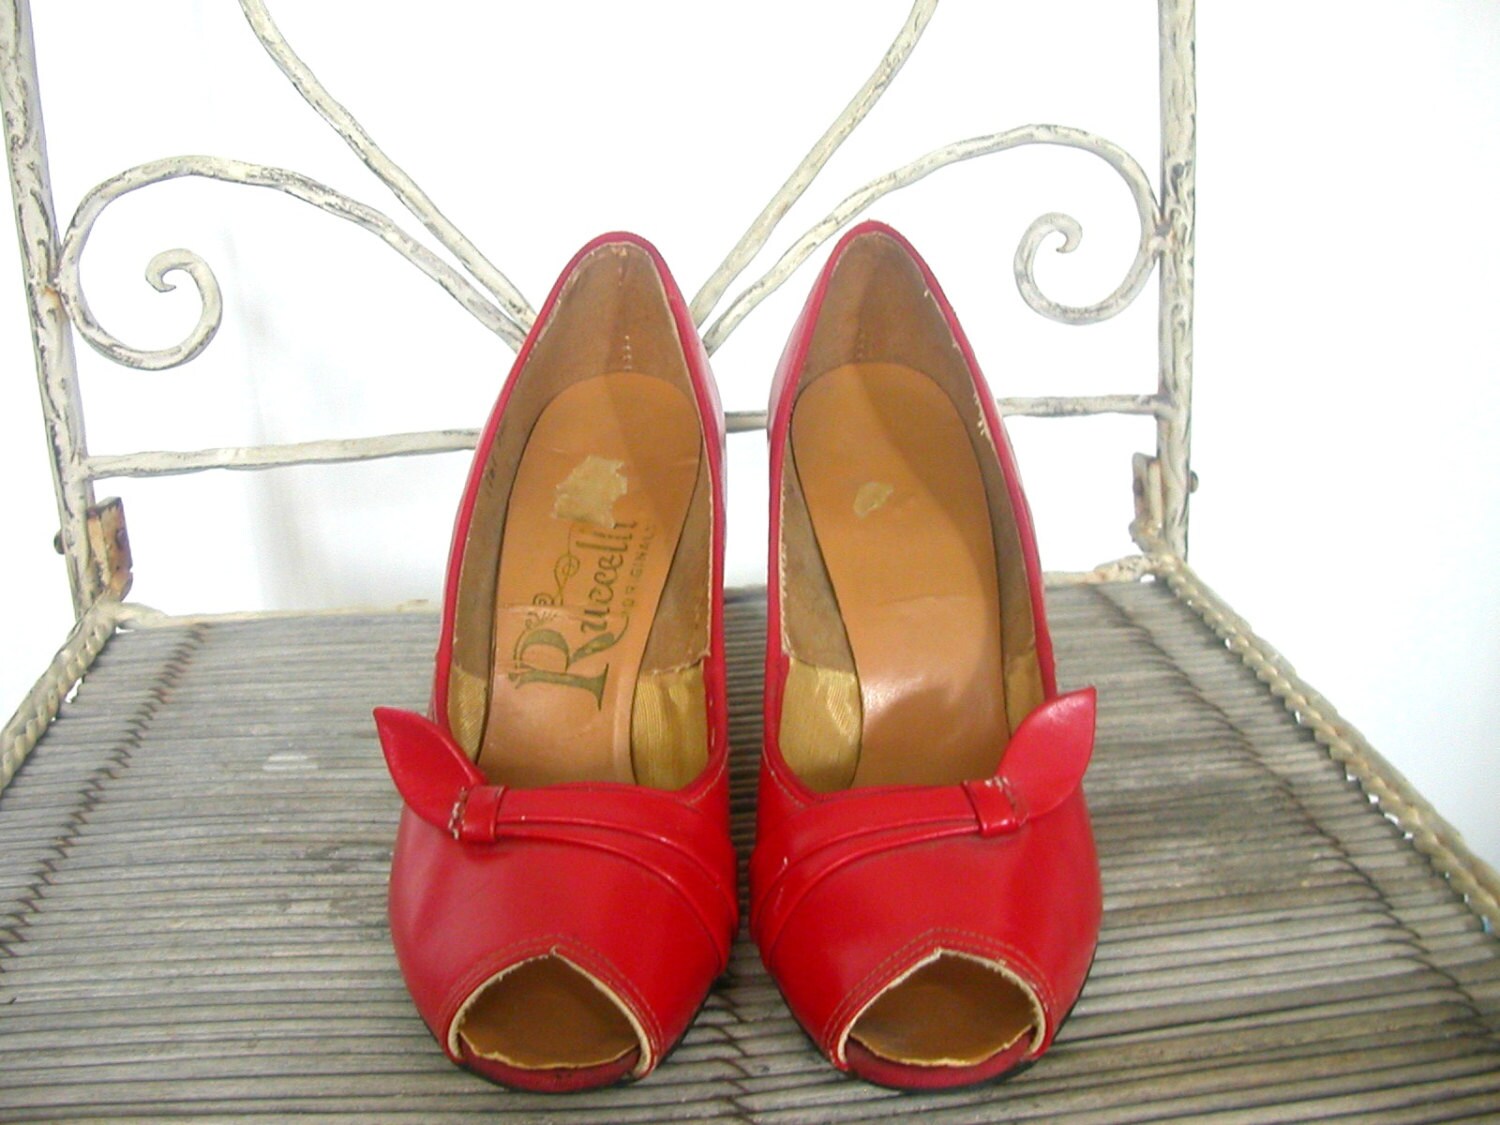 red high heels red pumps peep toe shoes Schoenen damesschoenen Pumps 5.5 Ruccelli 50s Pumps pin up shoes stilettos 